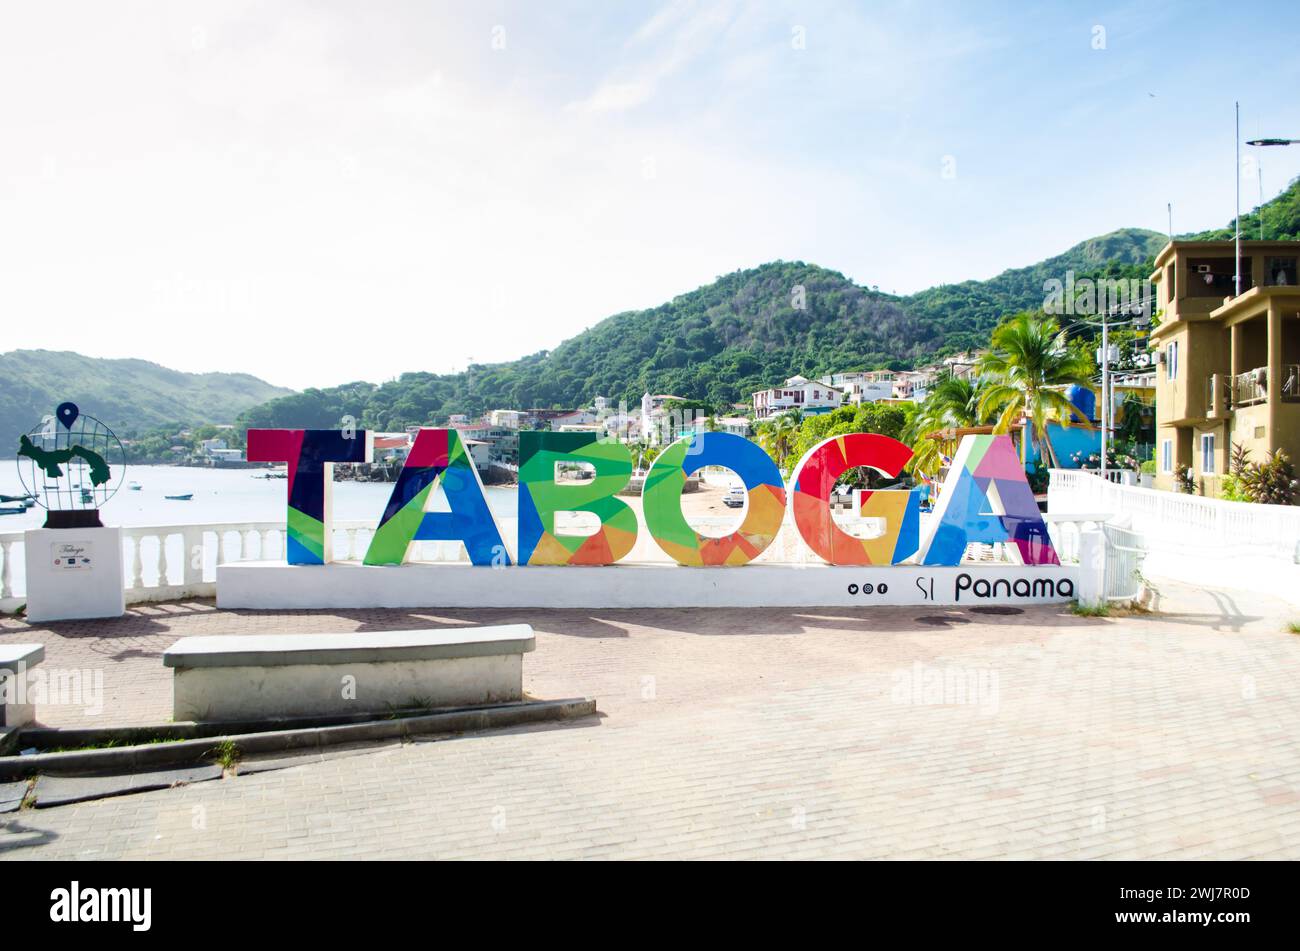 Welcome sign to Taboga Island in Panama Bay Stock Photo